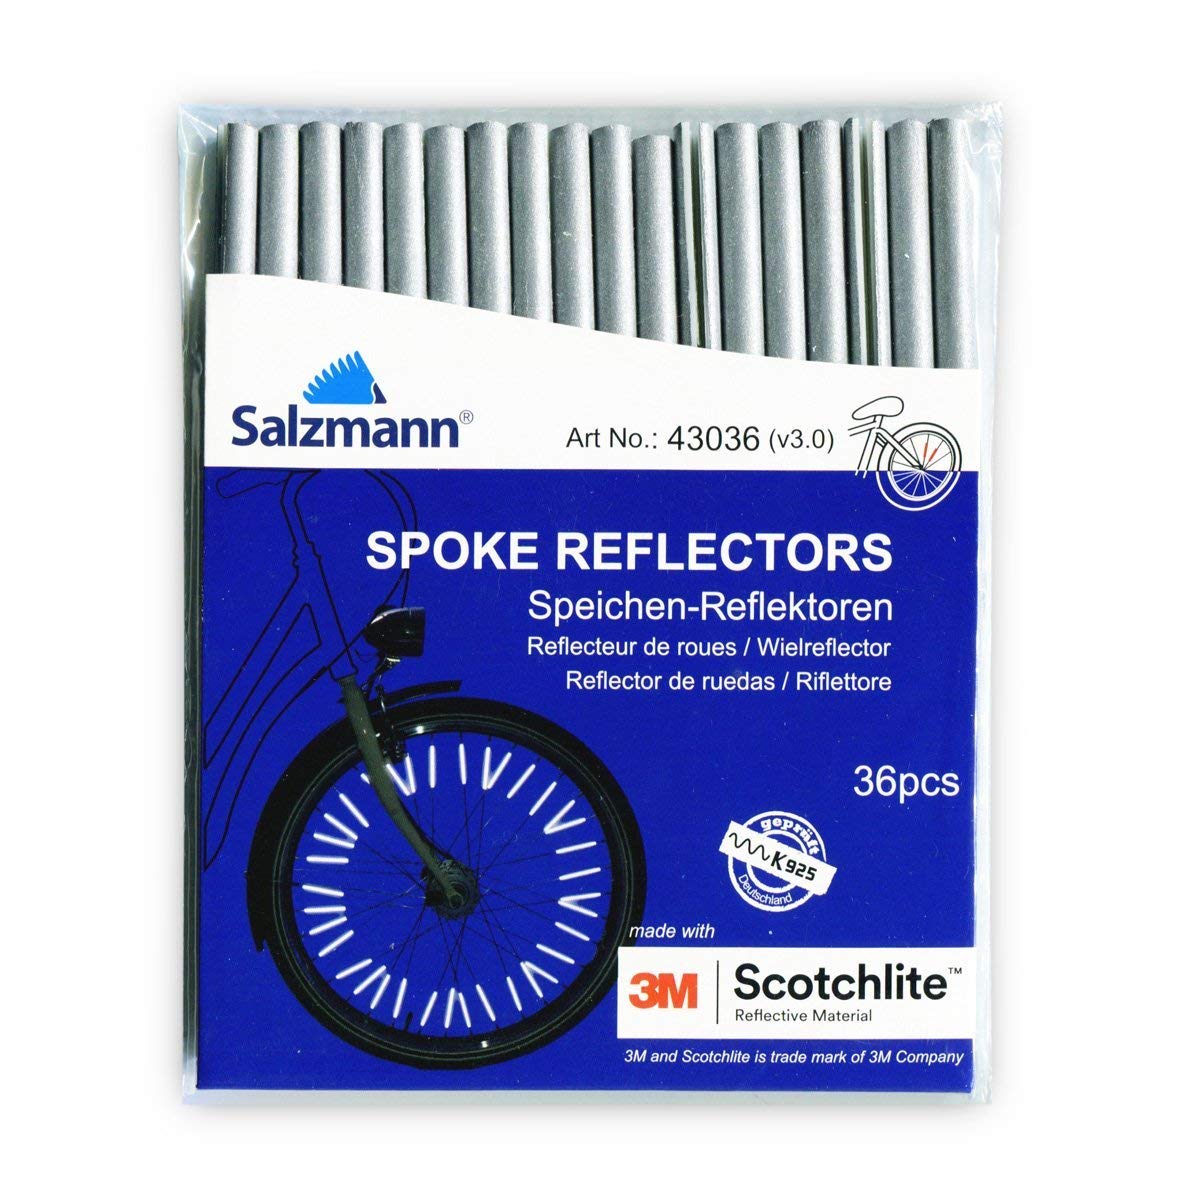 Clsoe up image of spoke reflectors in packaging. 